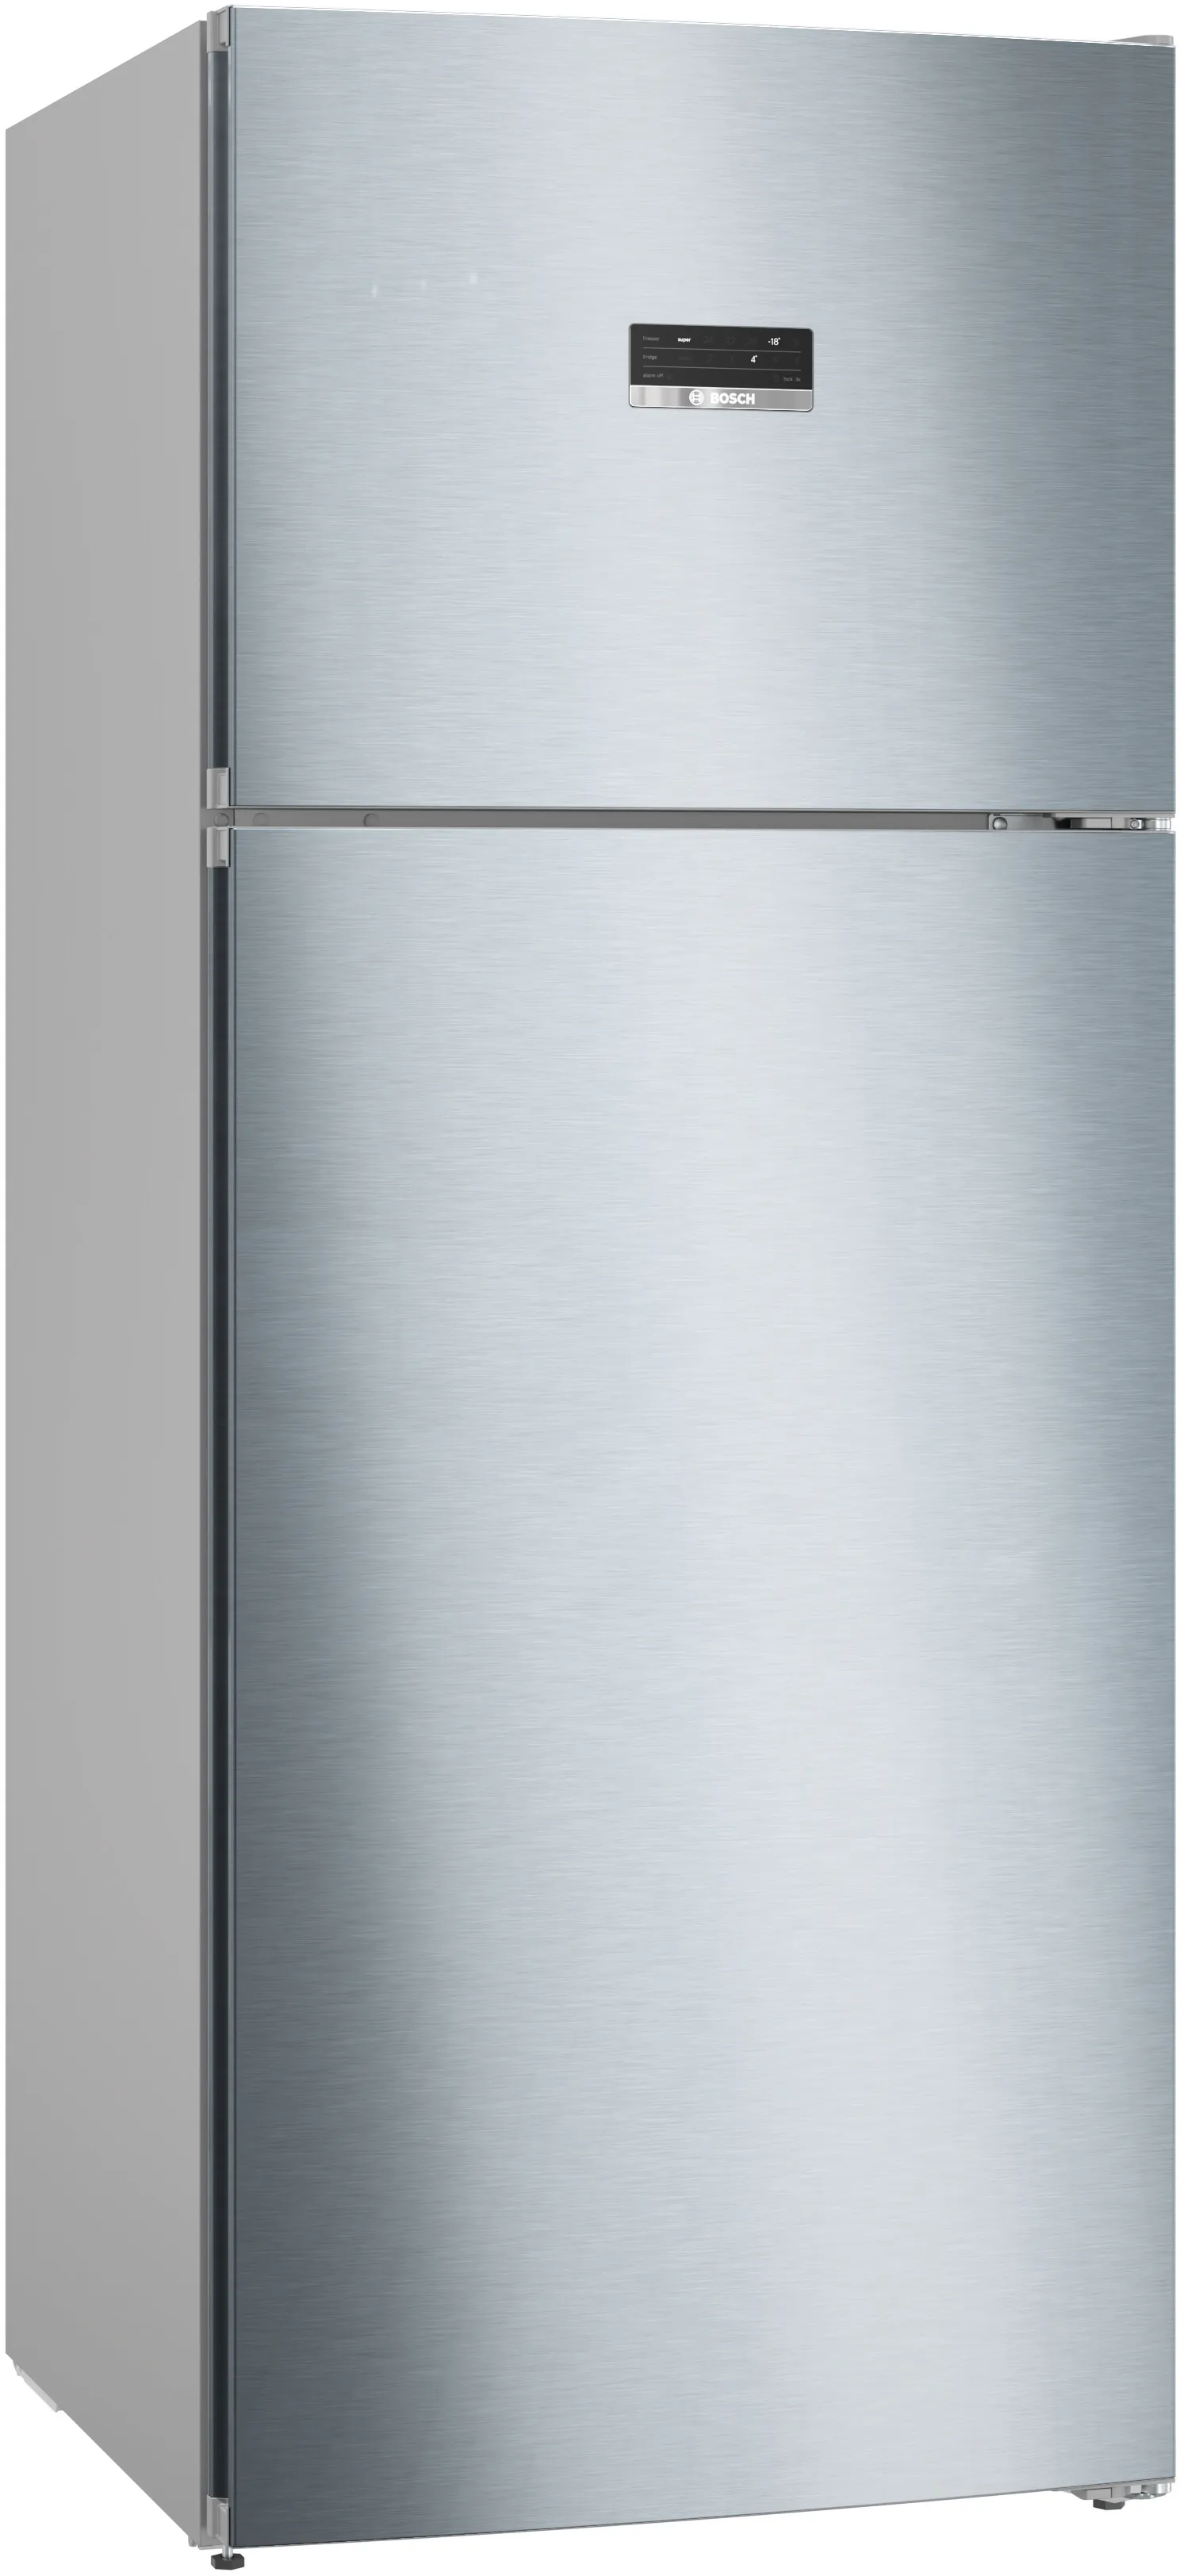 Series 4 free-standing fridge-freezer with freezer at top 186 x 75 cm Brushed steel anti-fingerprint 